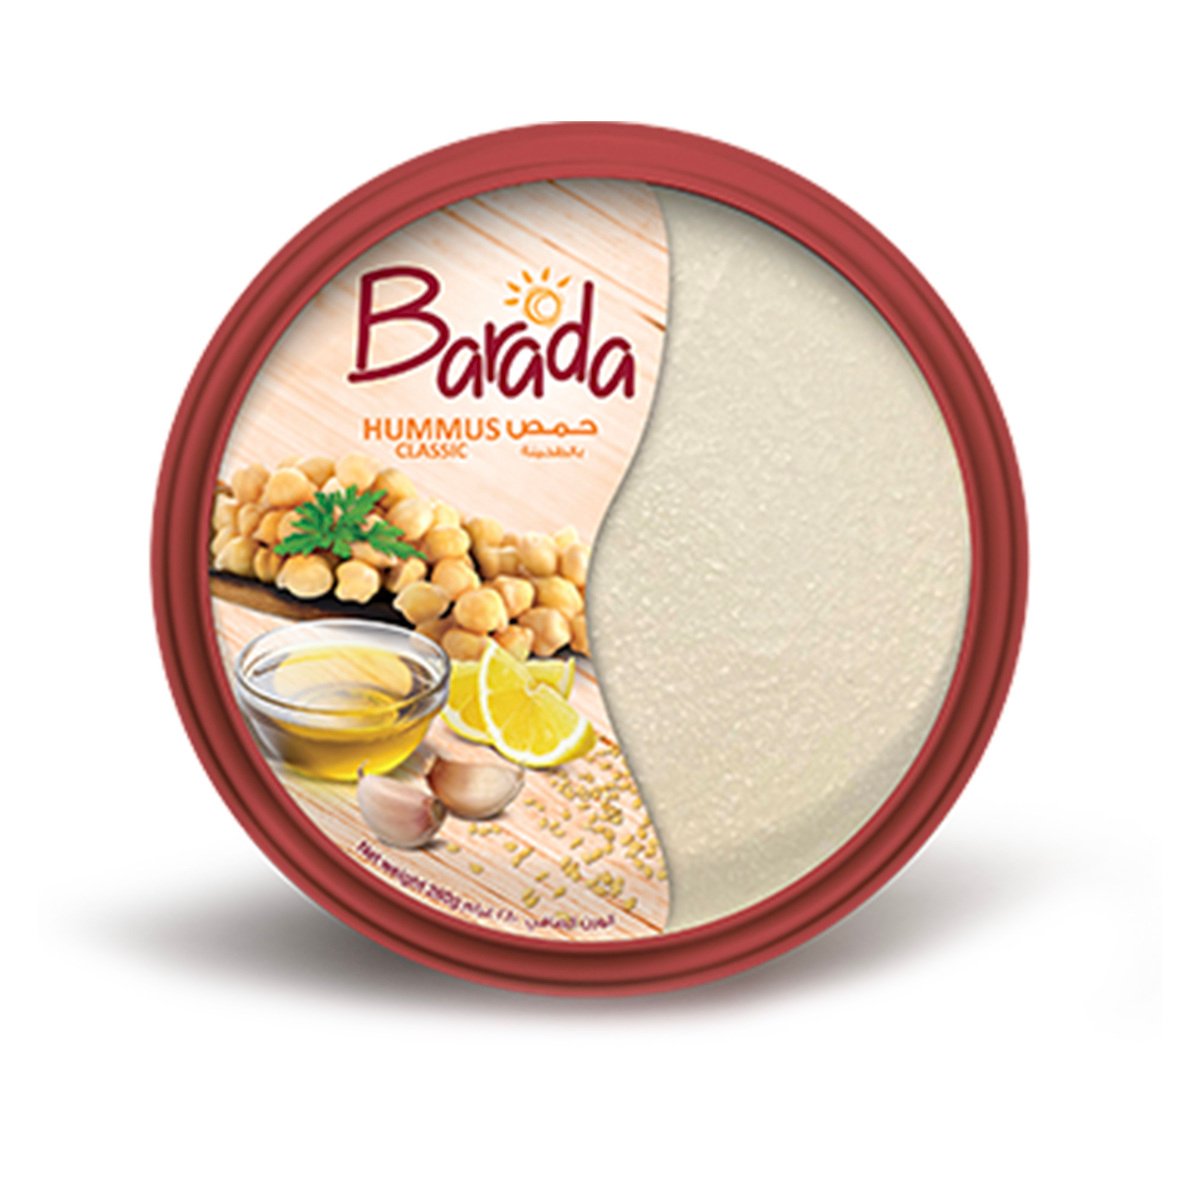 Barada Hummus Classic 280 g